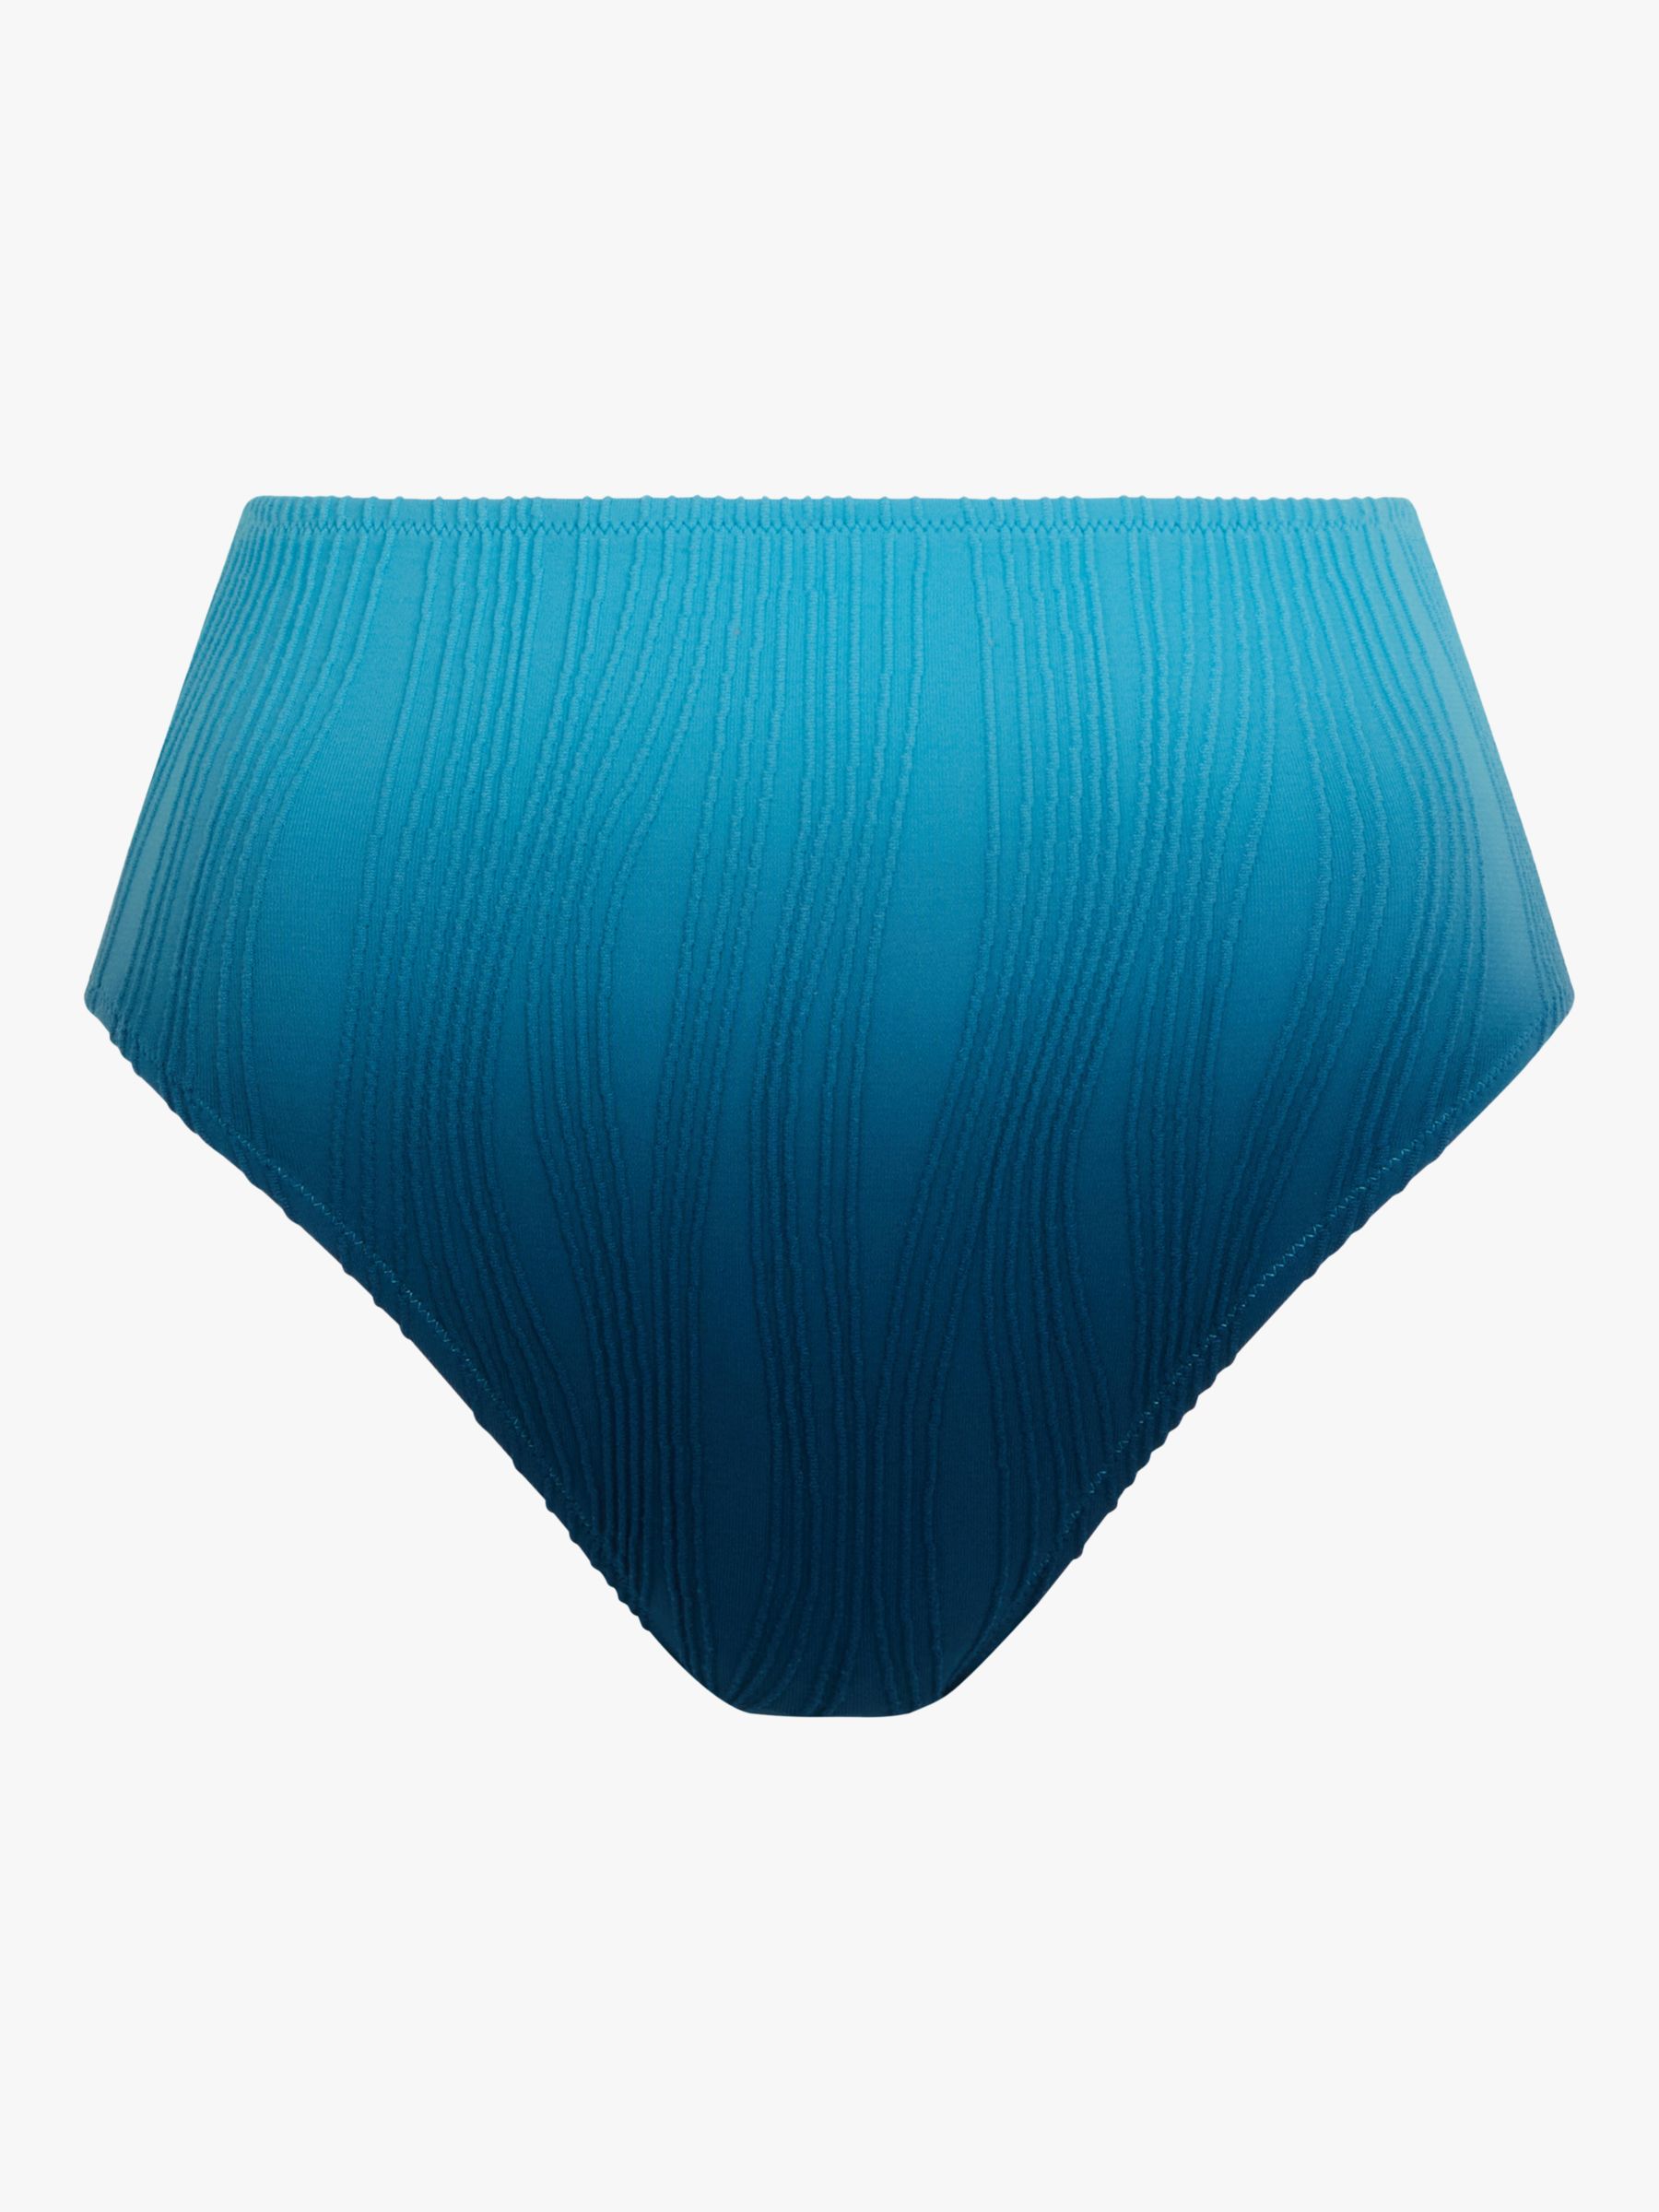 Chantelle Pulp Swimwear Textured Full Brief Bikini Bottoms, Blue Tie Dye, One Size